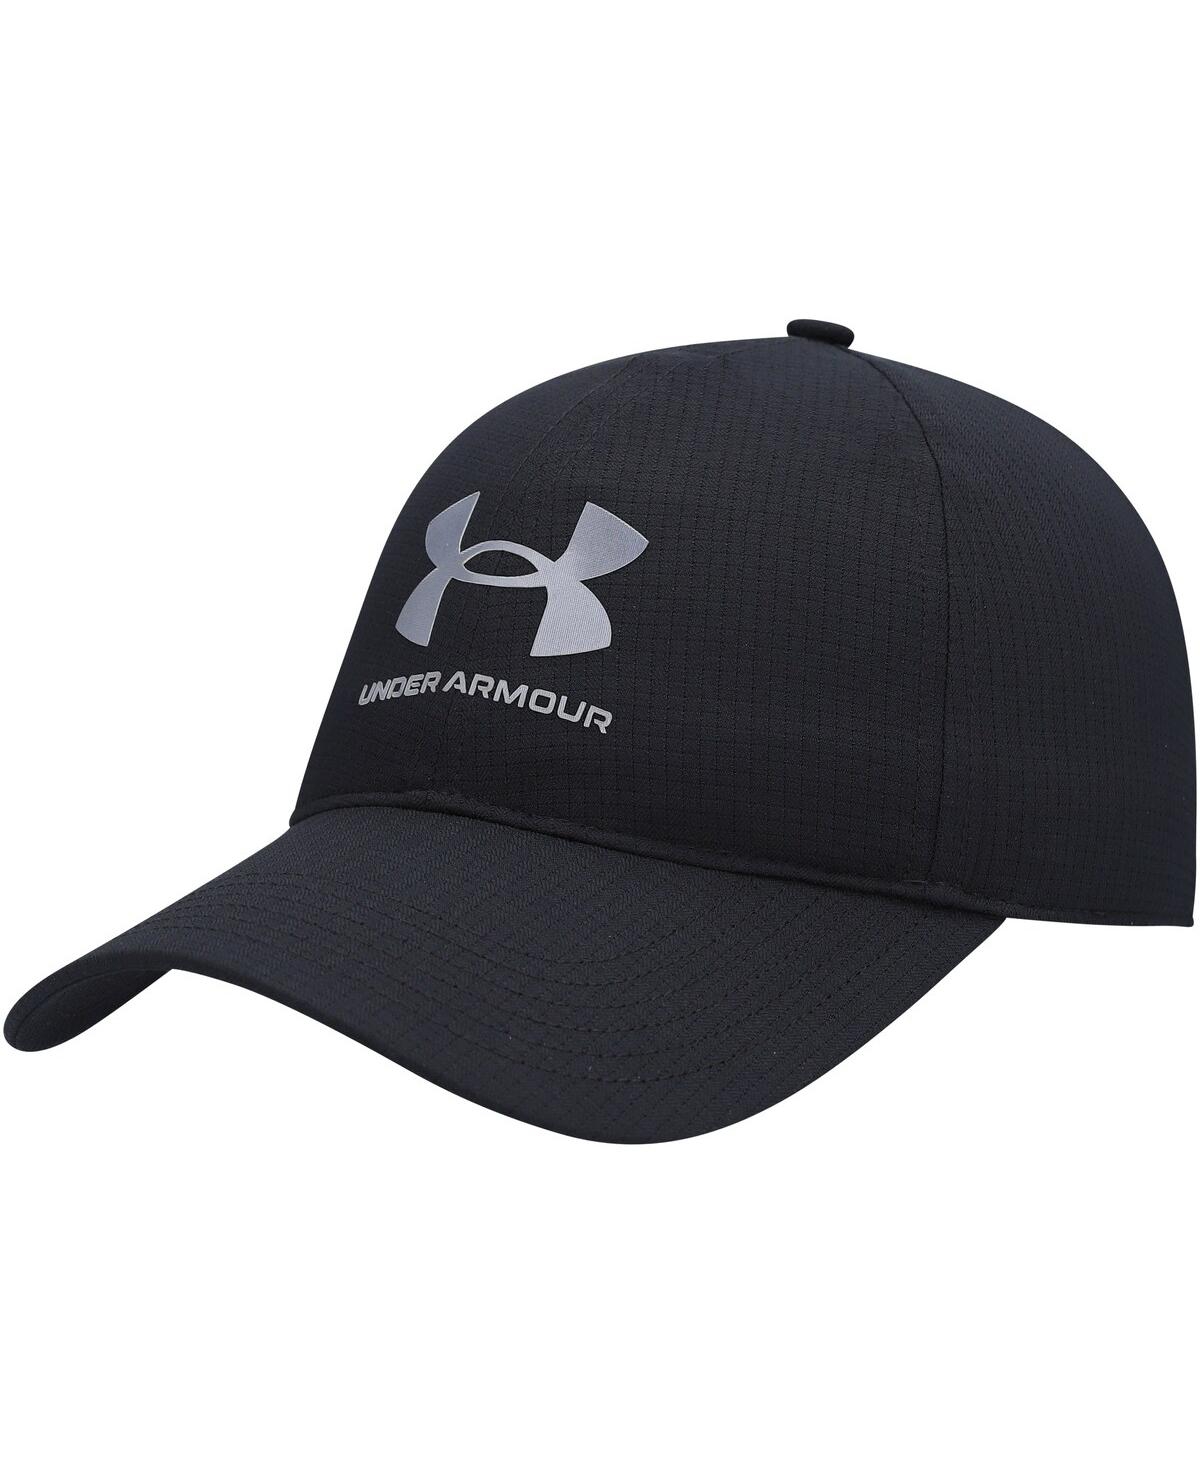 Under Armour Men's  Black Performance Adjustable Hat